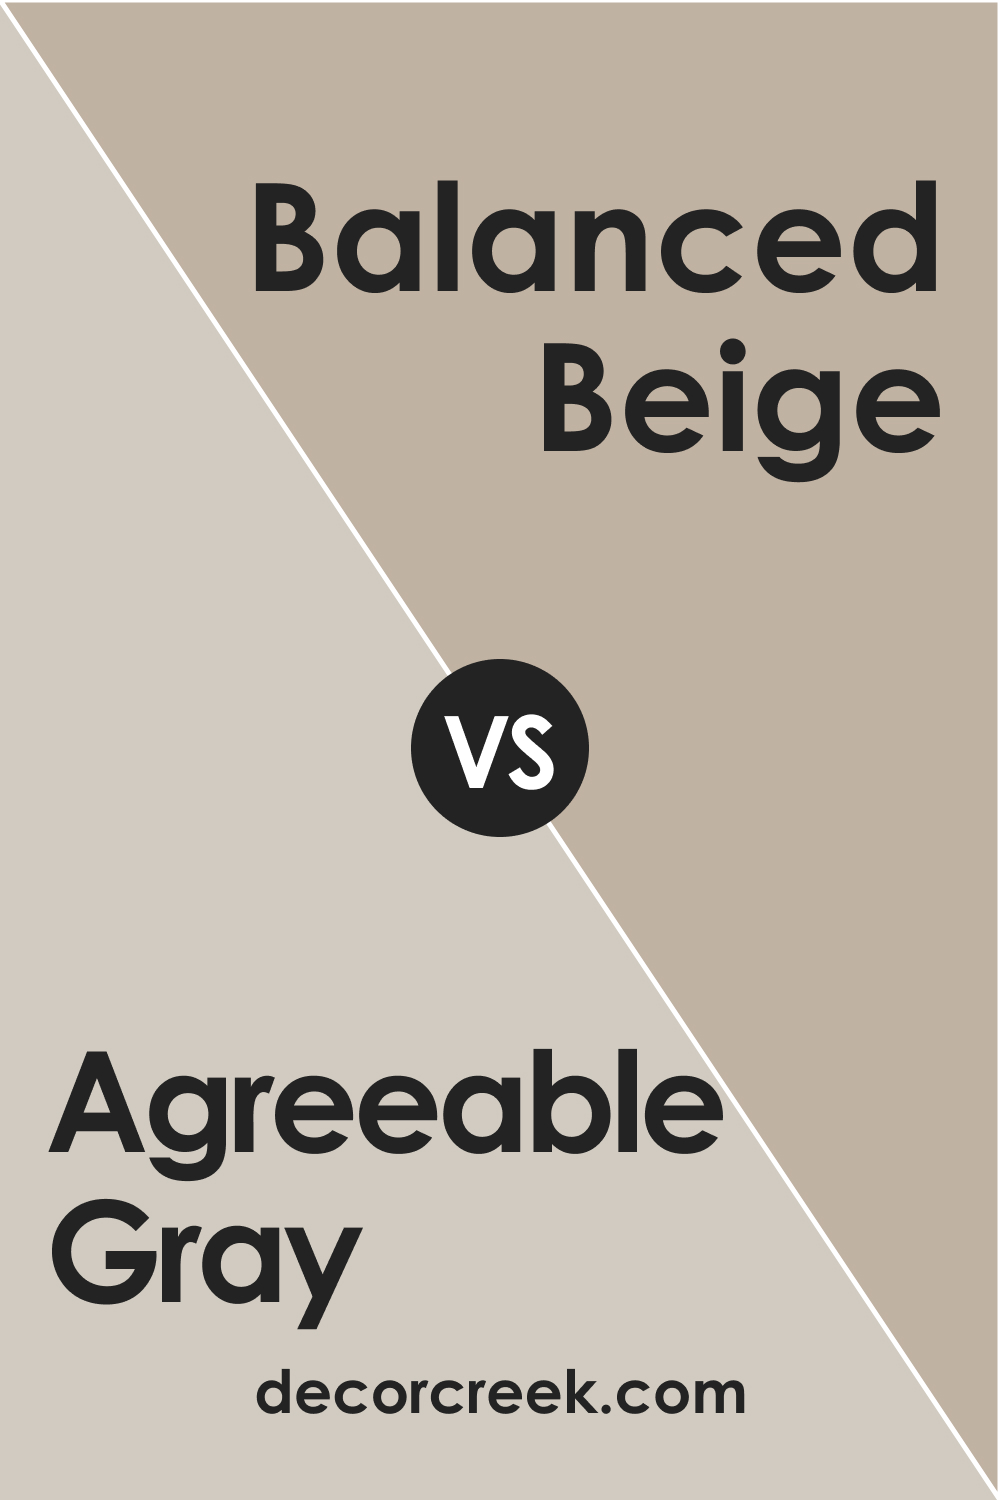 SW 7029 Agreeable Gray vs. SW 7037 Balanced Beige